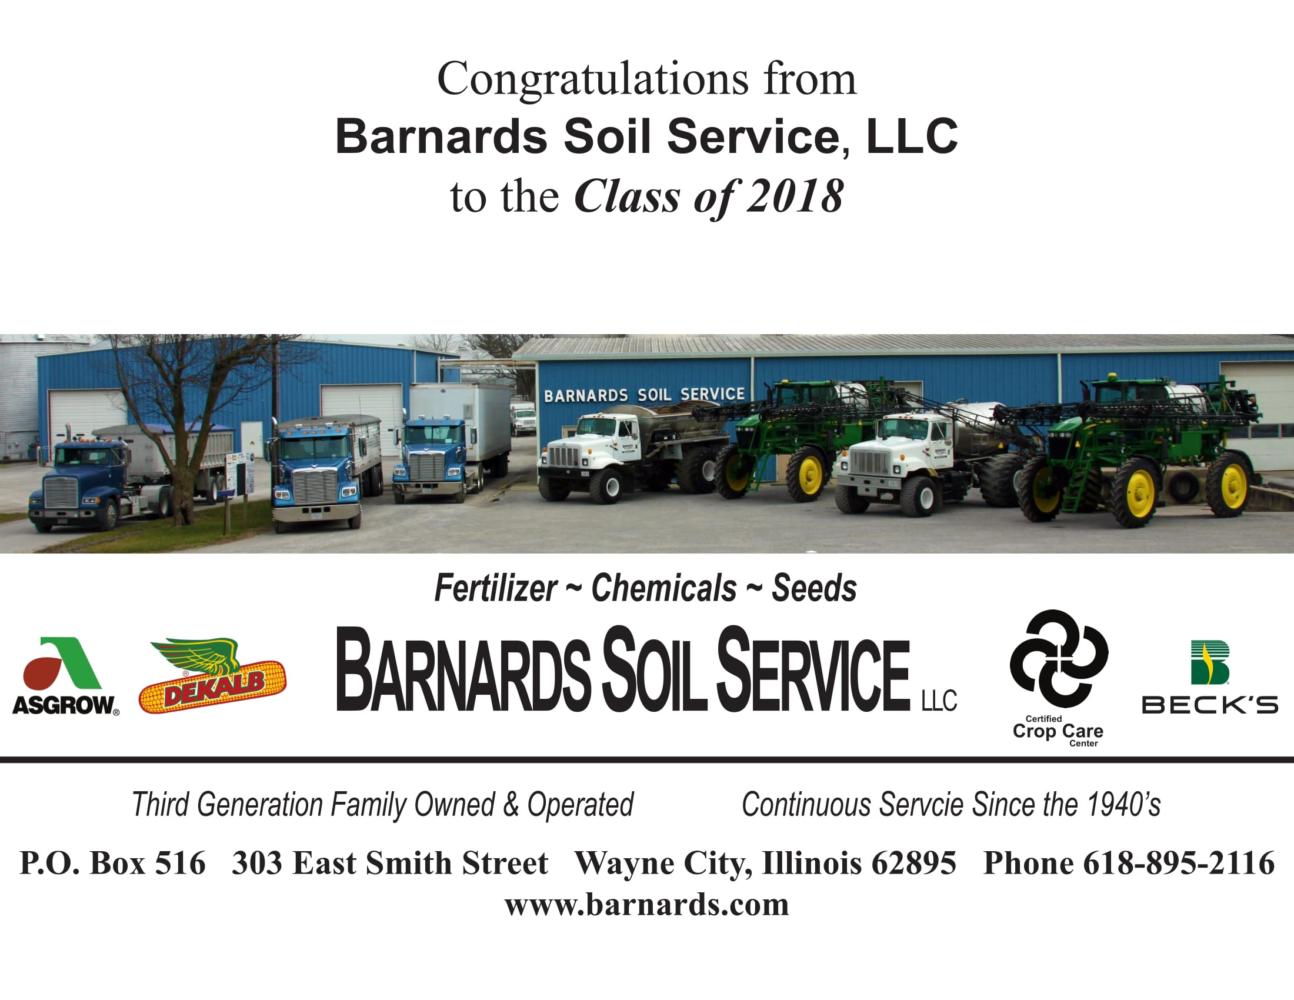 Barnards Soil Service